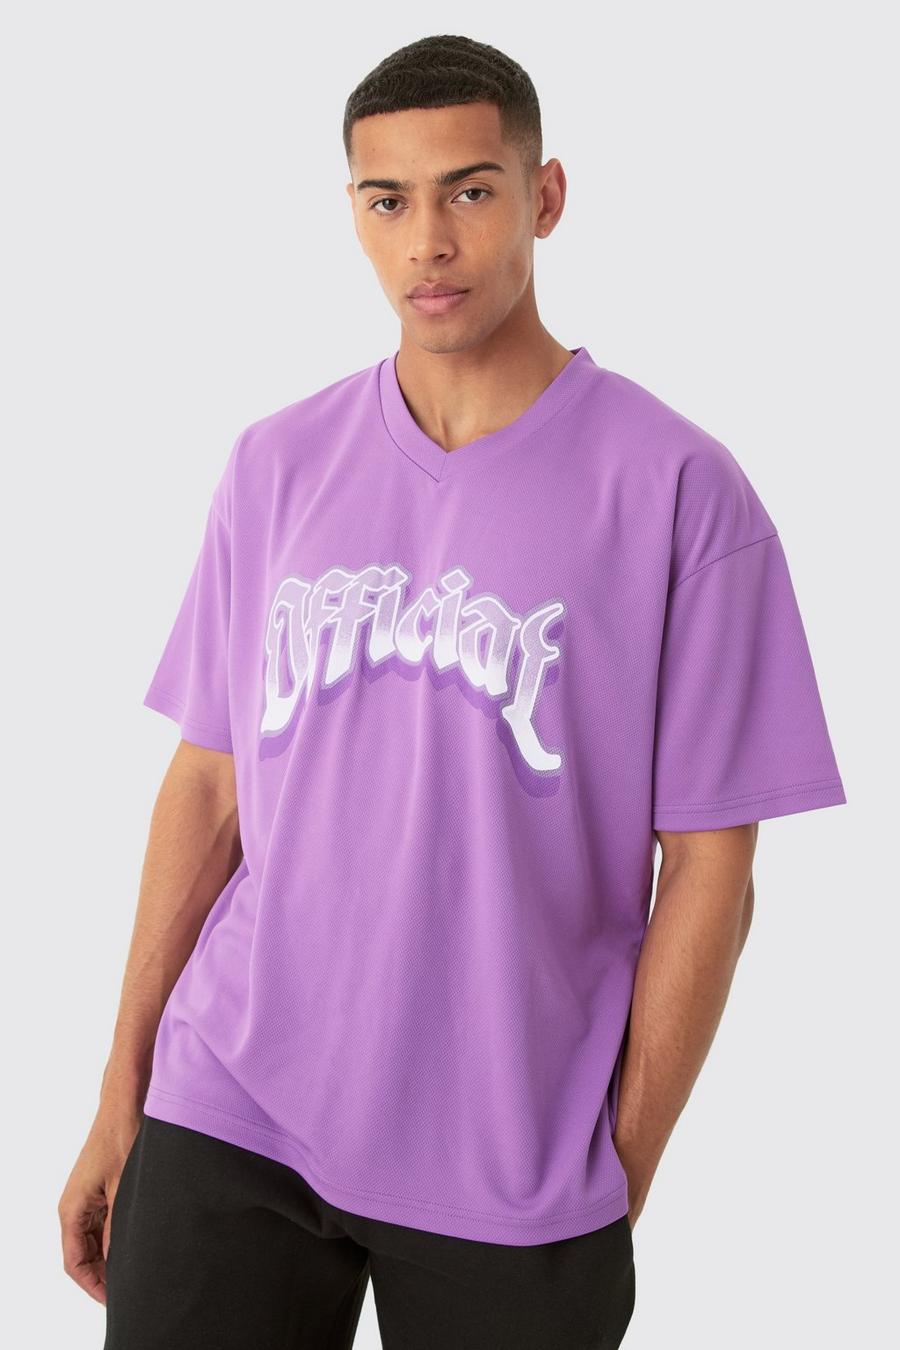 Purple Oversized Official Mesh Varsity Top